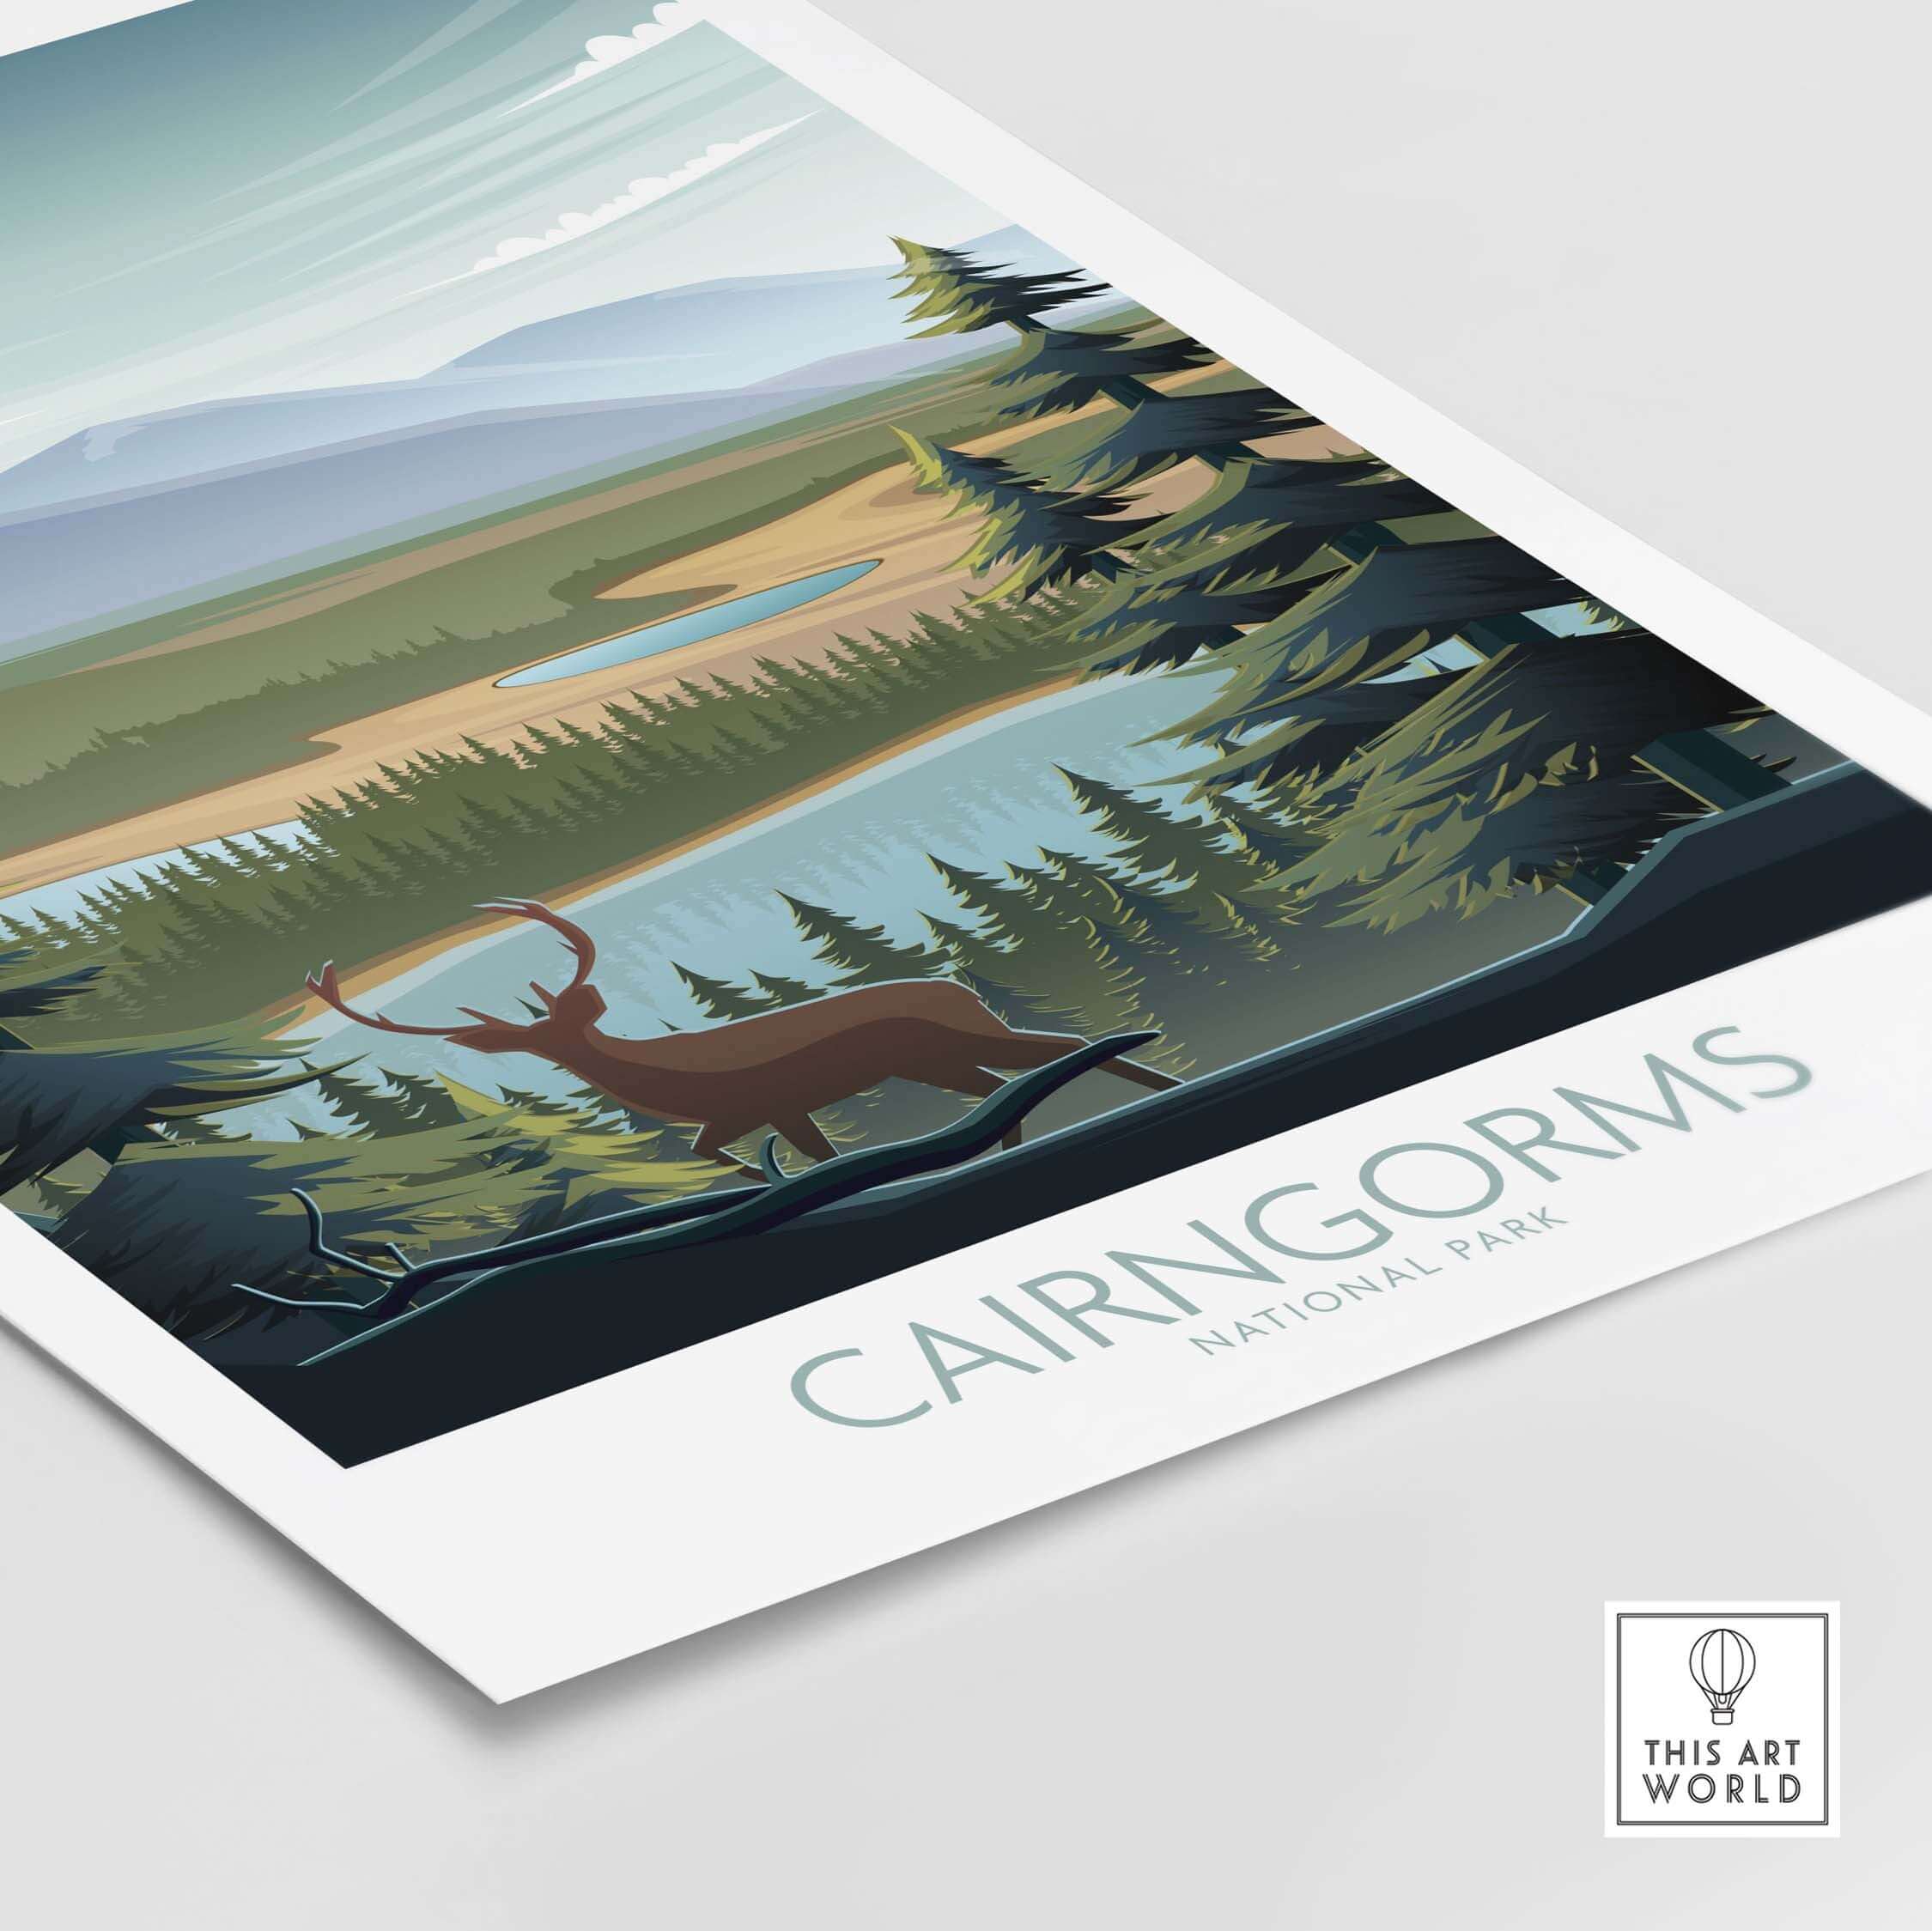 cairngorms national park poster | art print